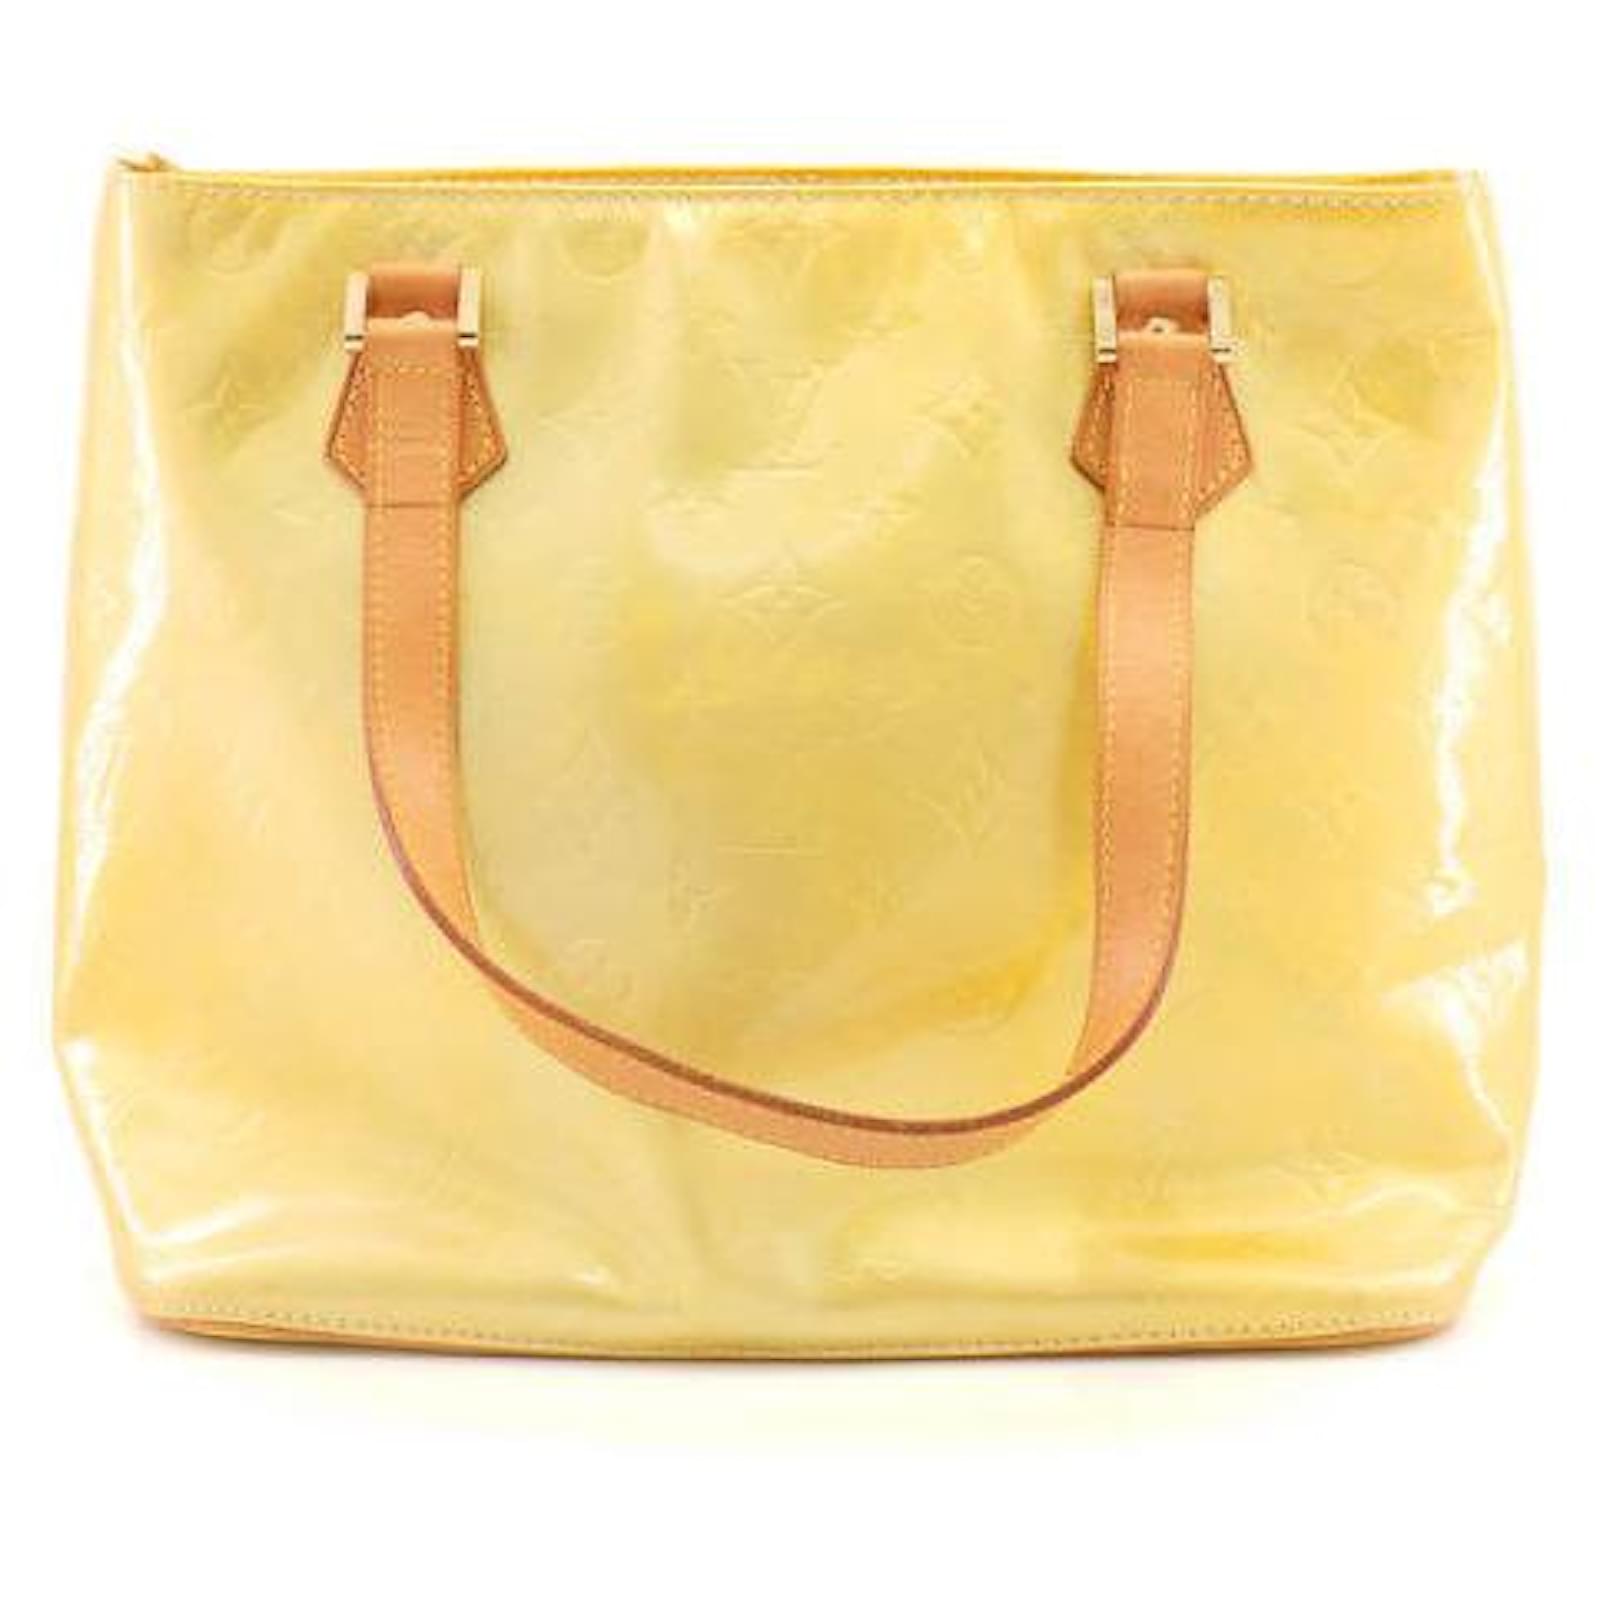 Houston patent leather handbag Louis Vuitton Yellow in Patent